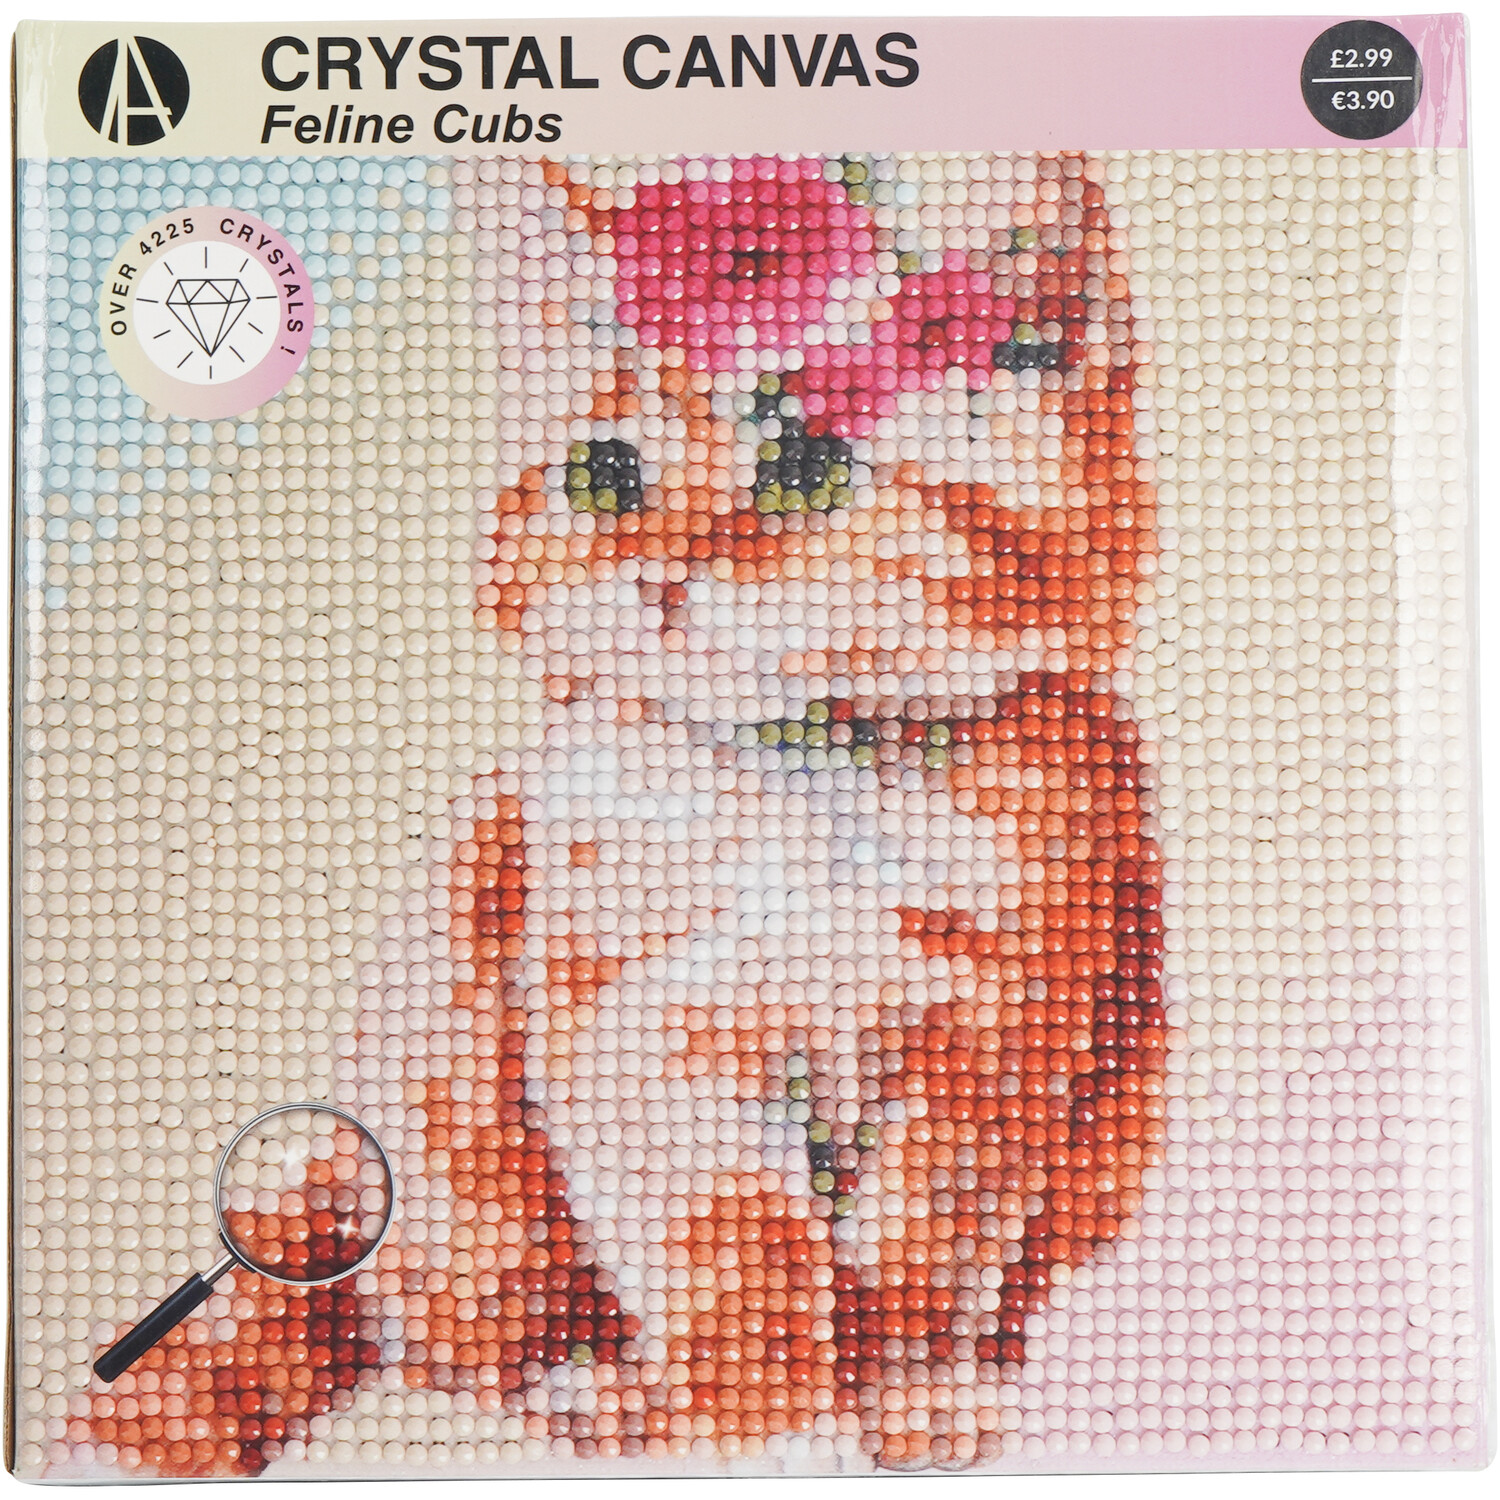 Crystal Canvas Feline Cubs Image 1